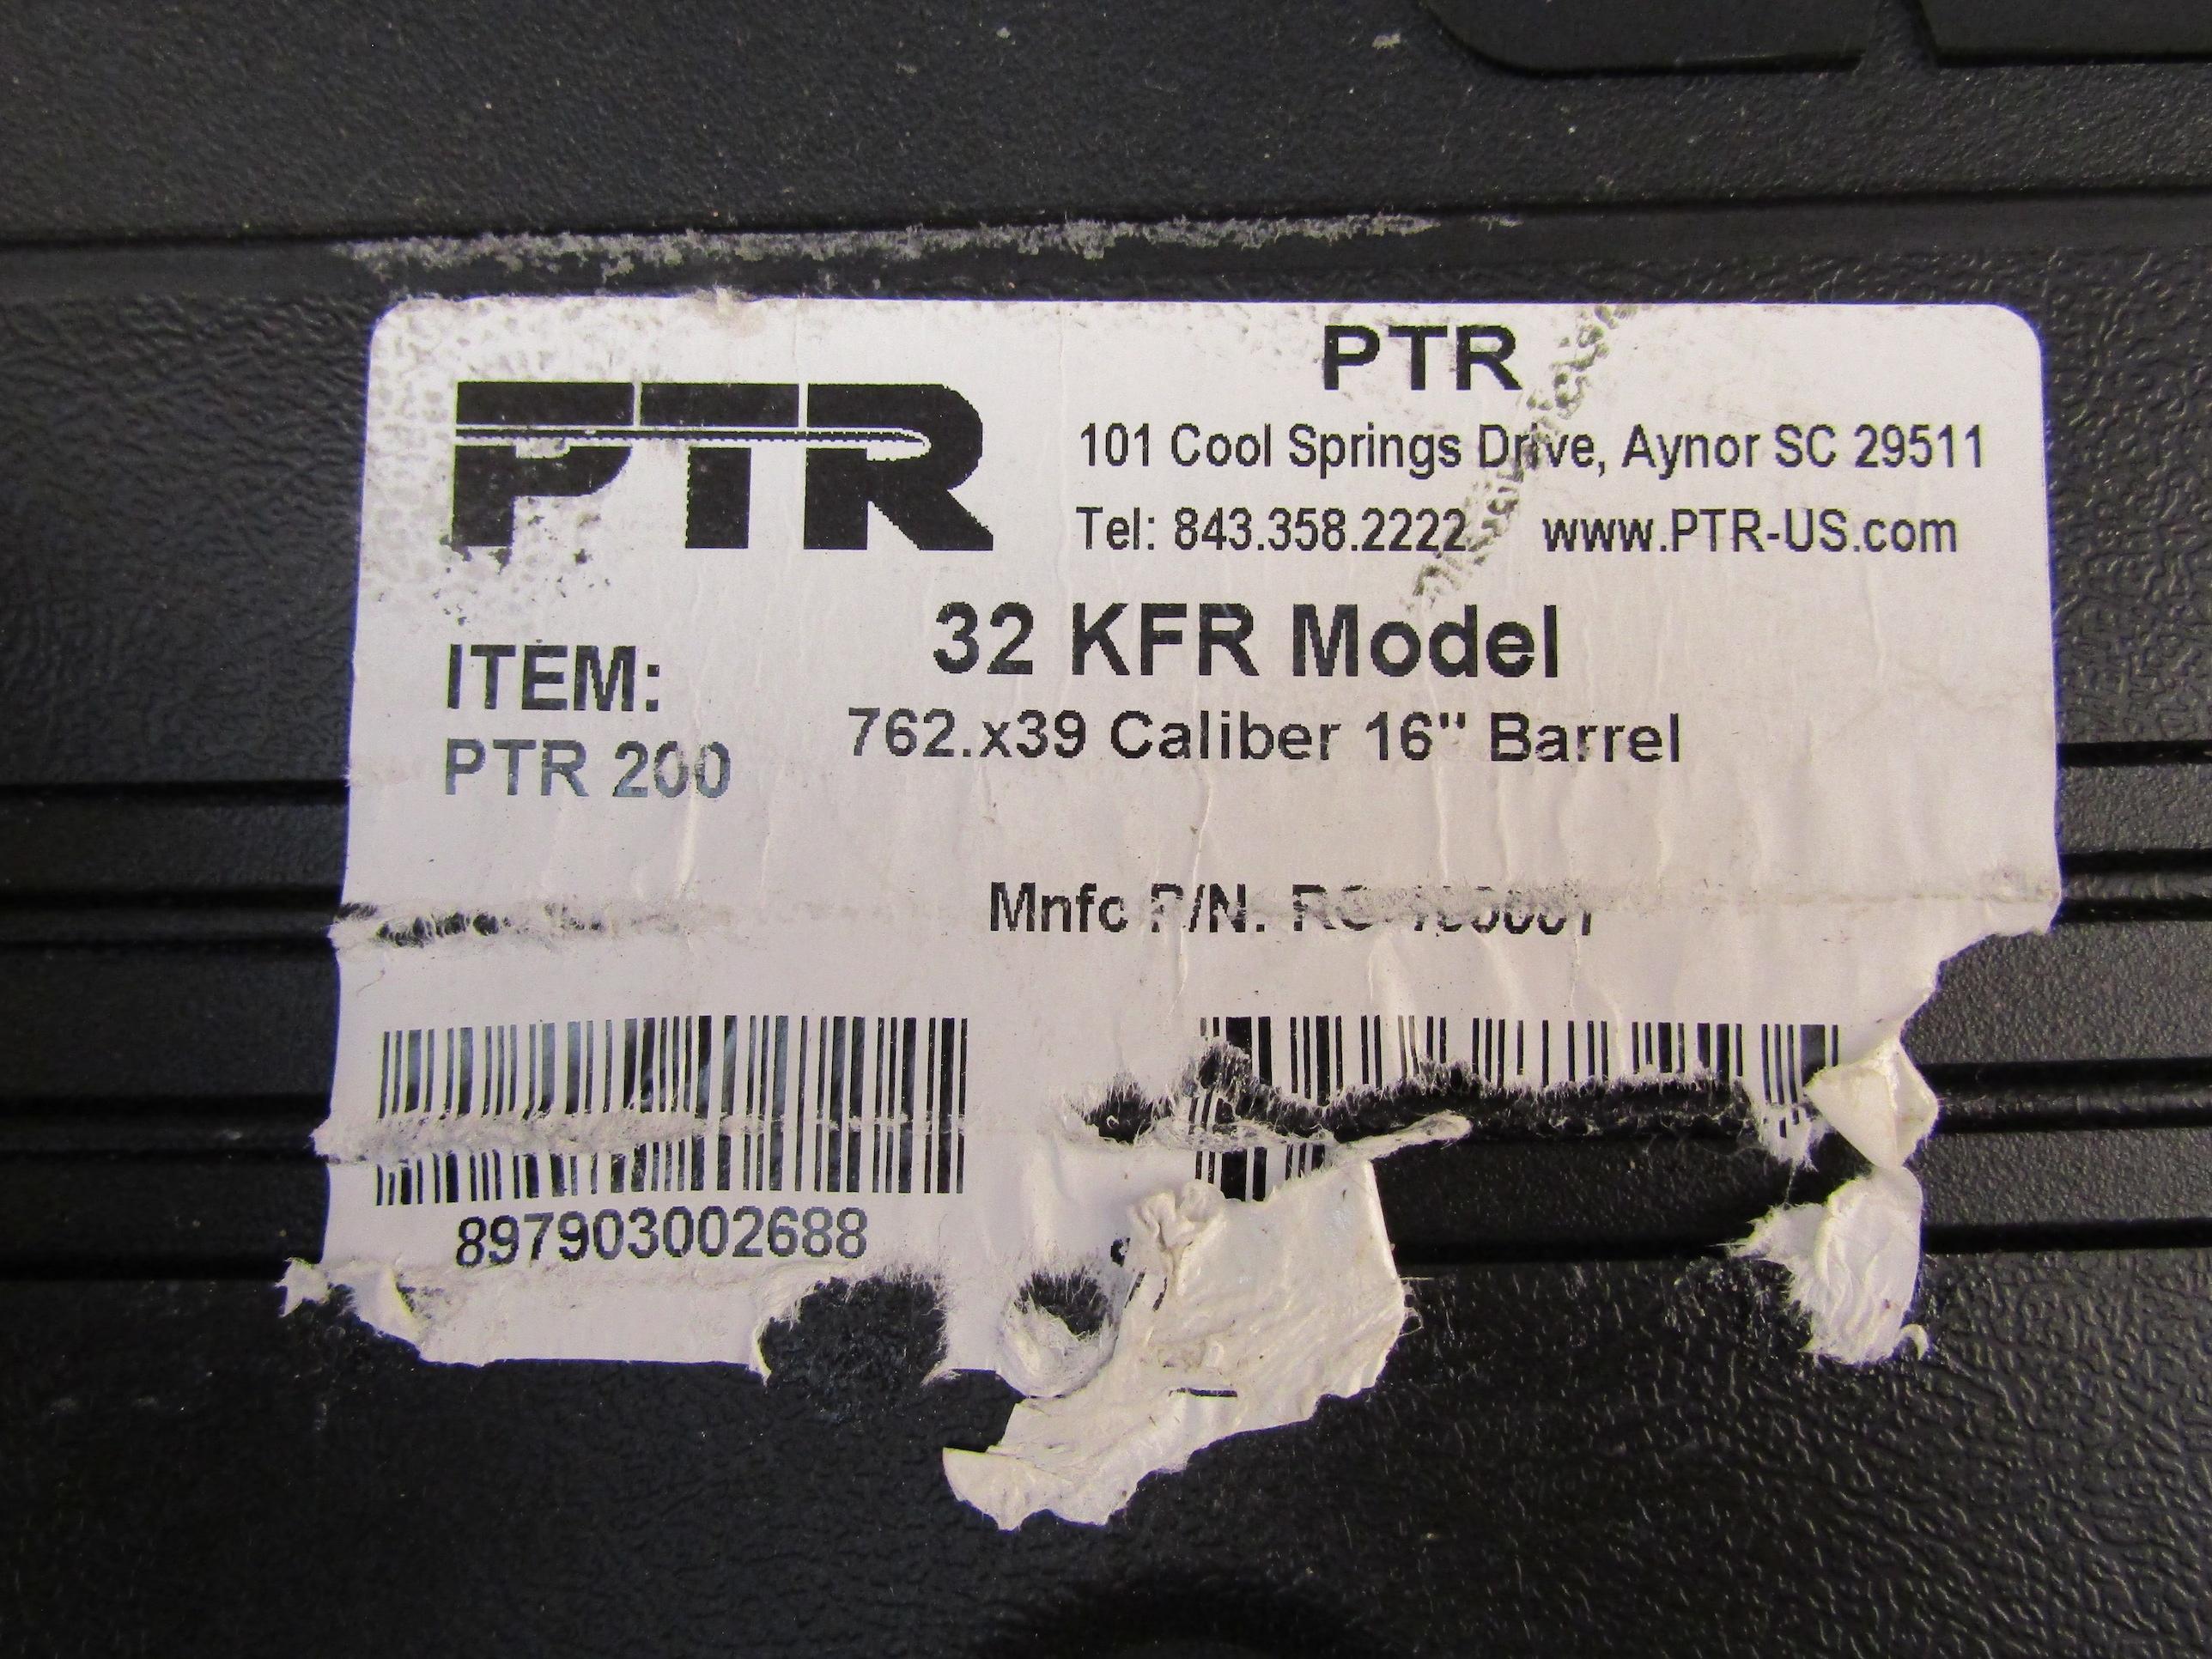 PTR Model PTR 32, Semi-Auto Rifle, 7.62x39, S#FC03189